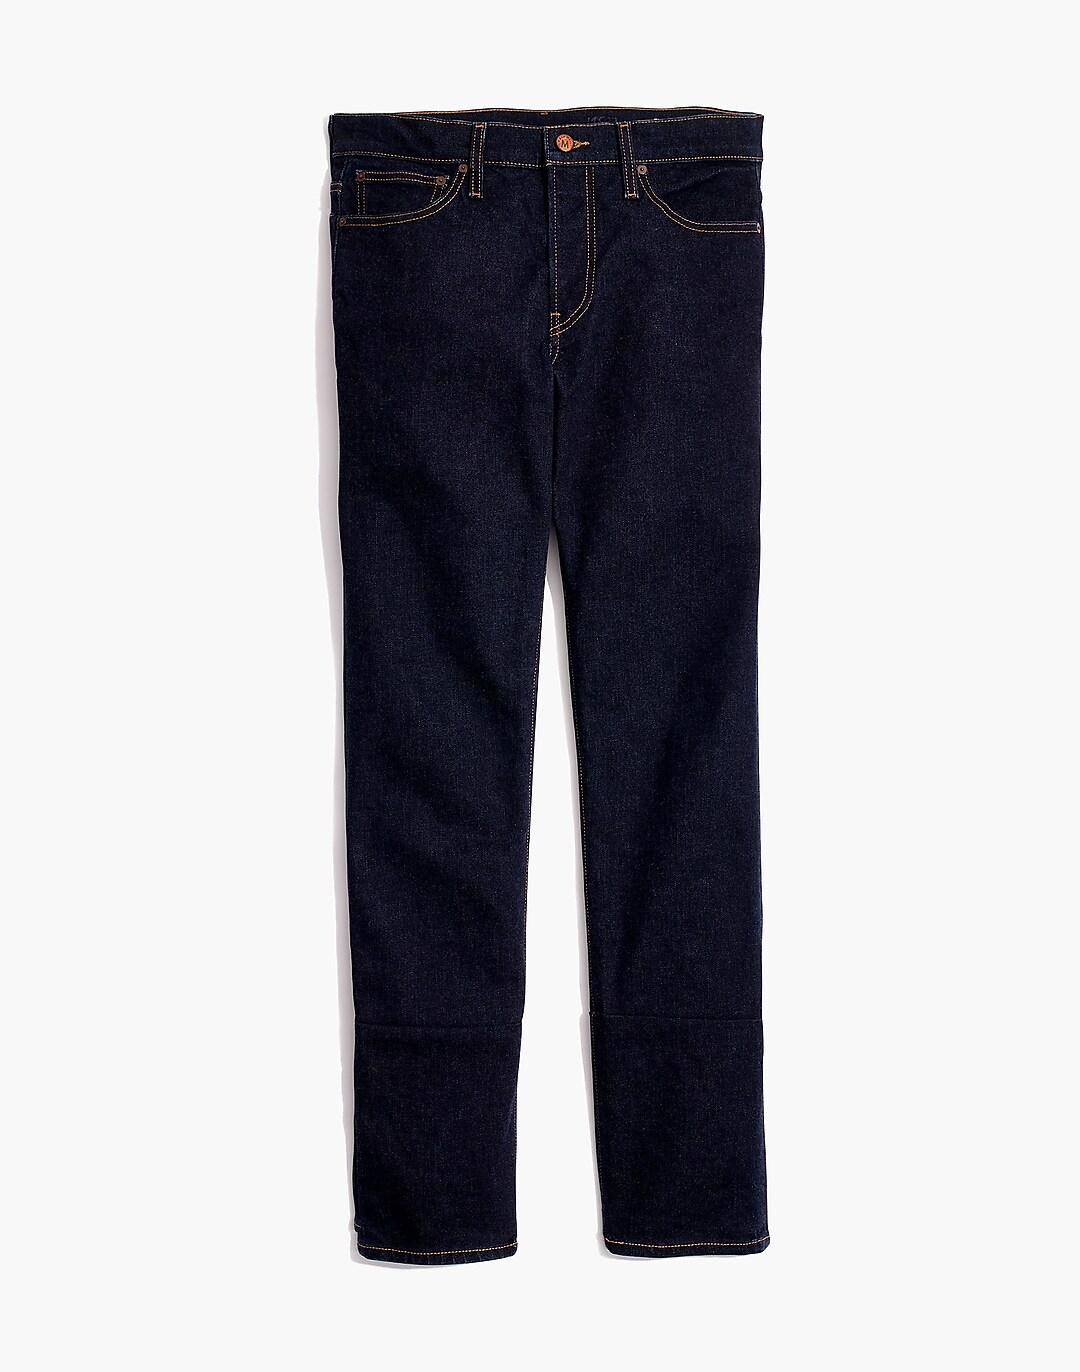 J75 Slim-fit jeans rinse-wash denim jeans